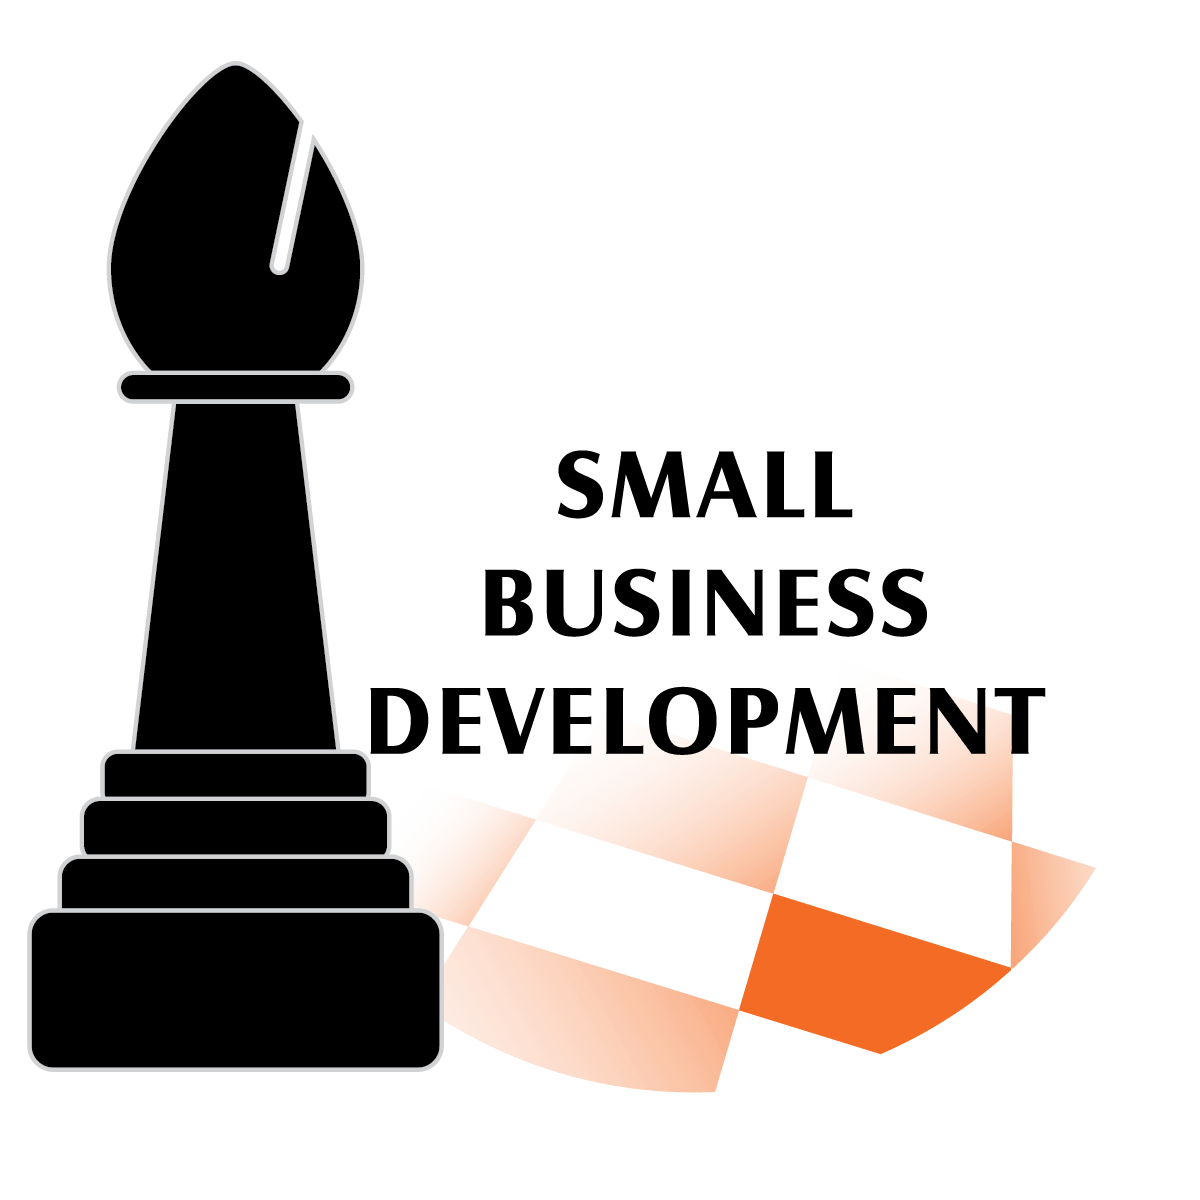 bishop chess piece Small Business Development